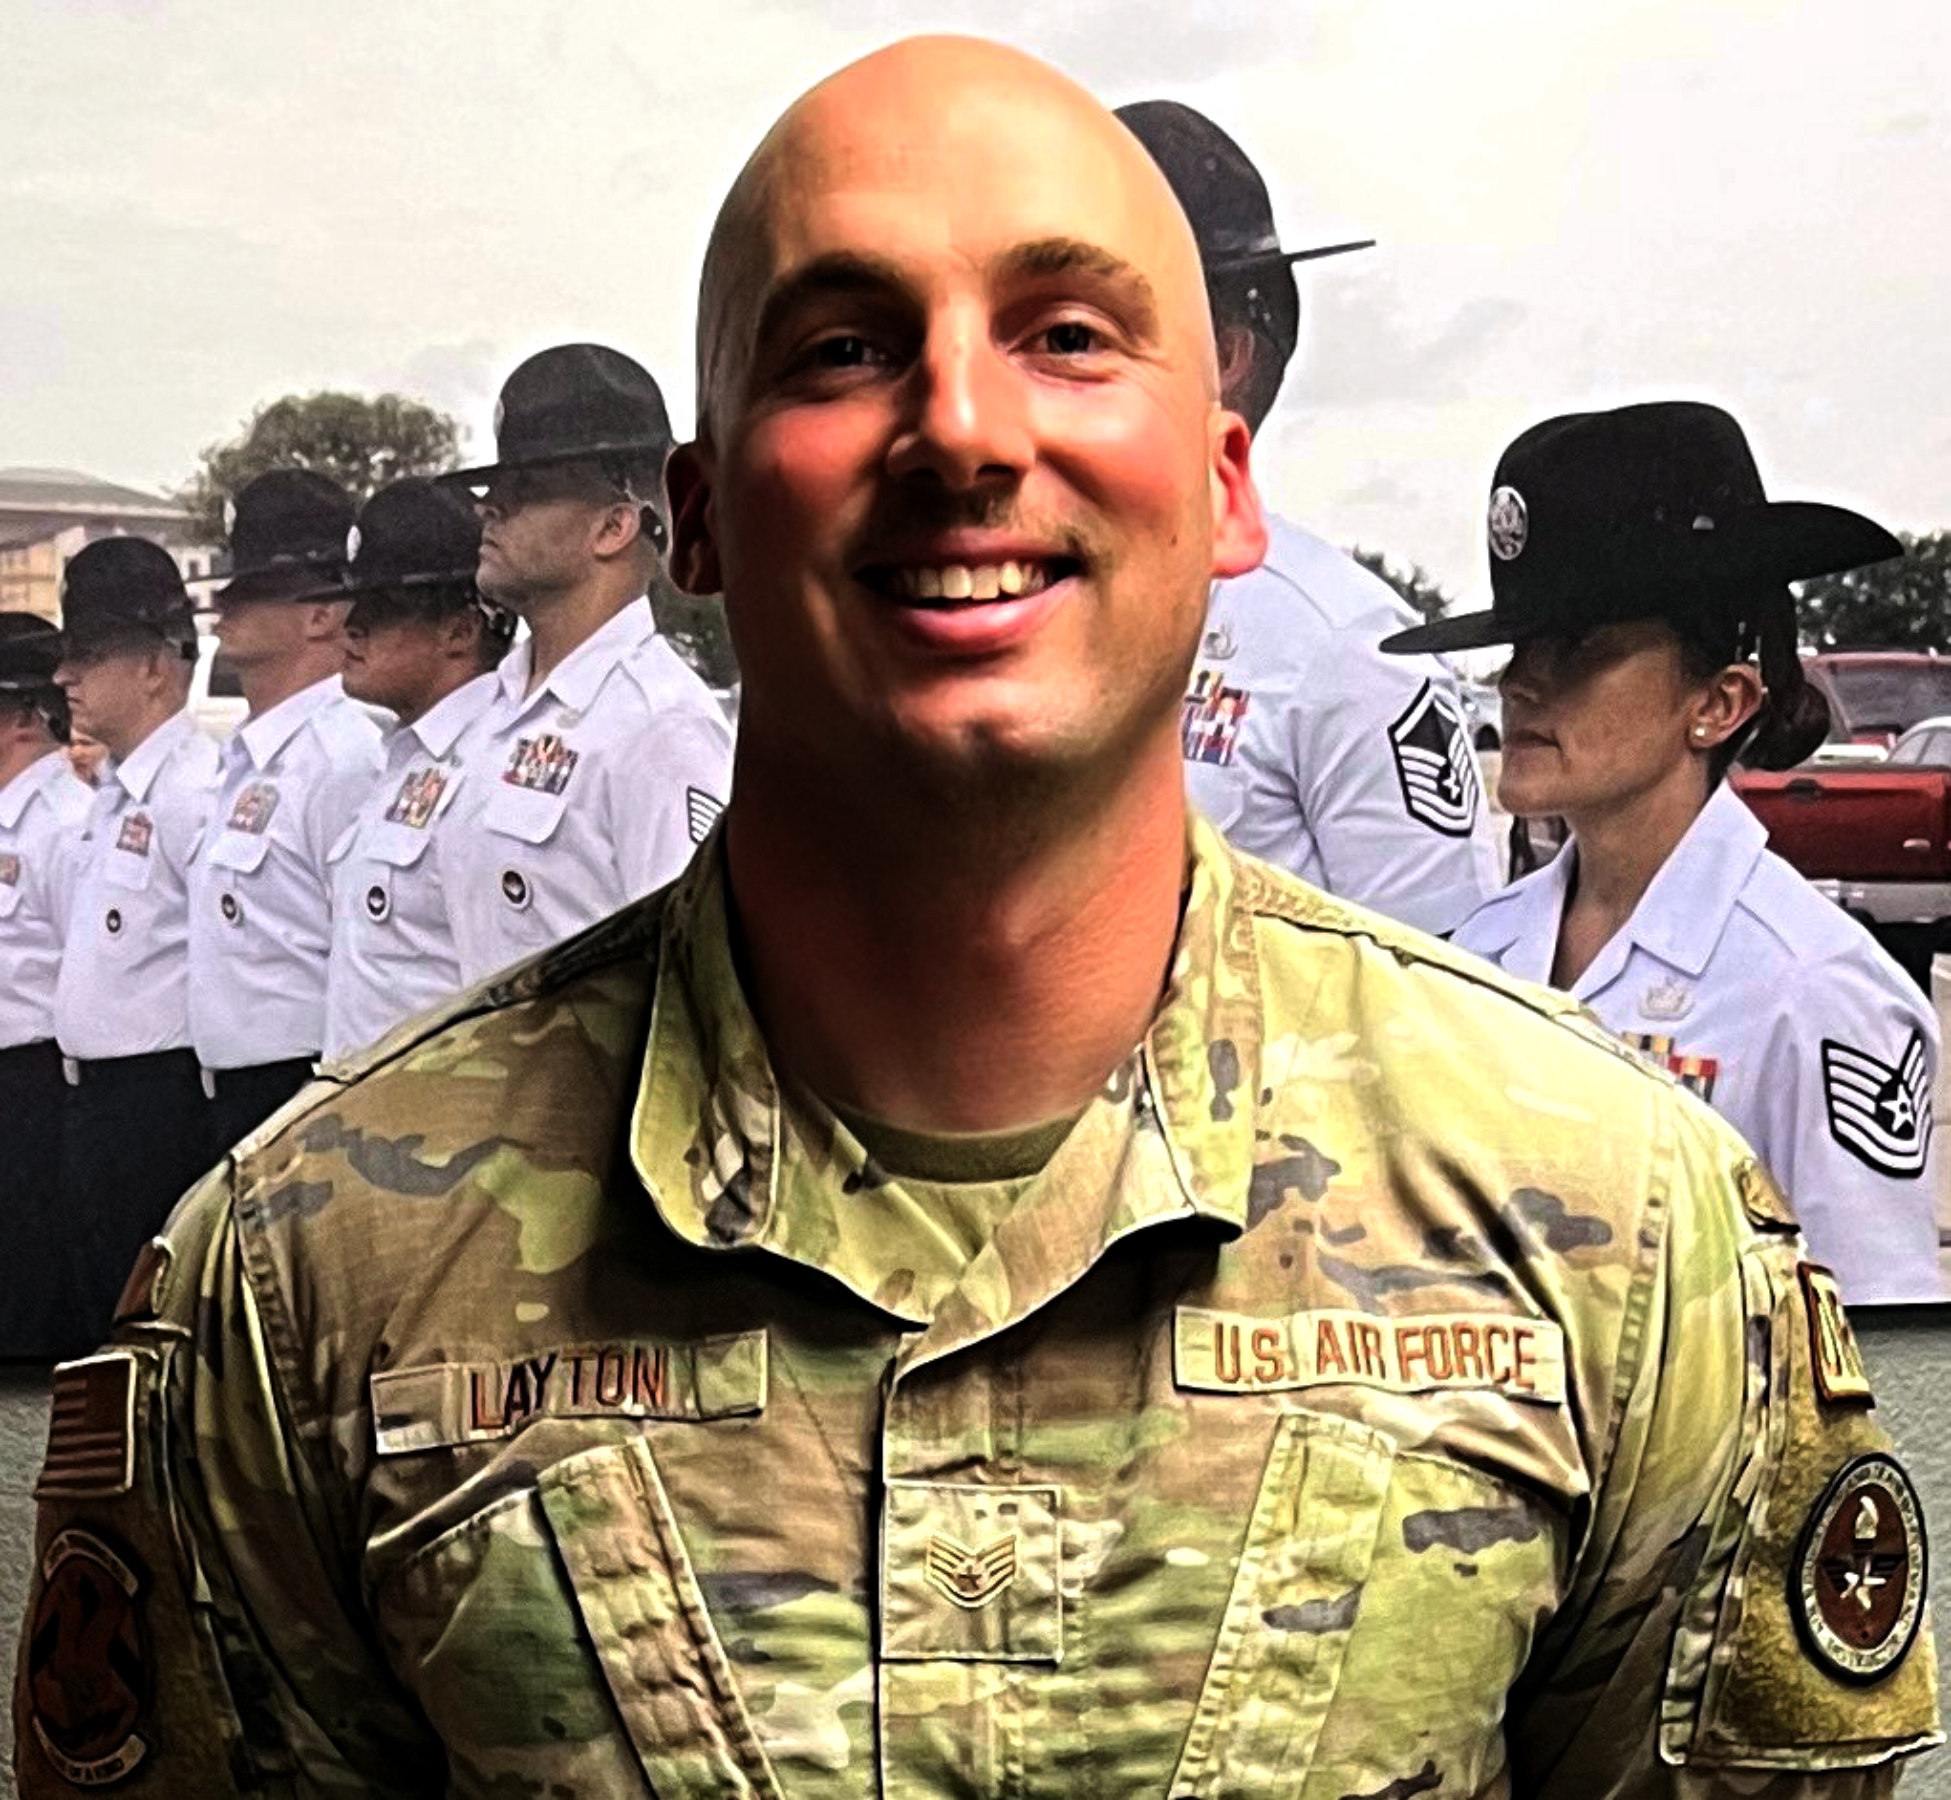 Staff Sgt. Phillip A. Layton